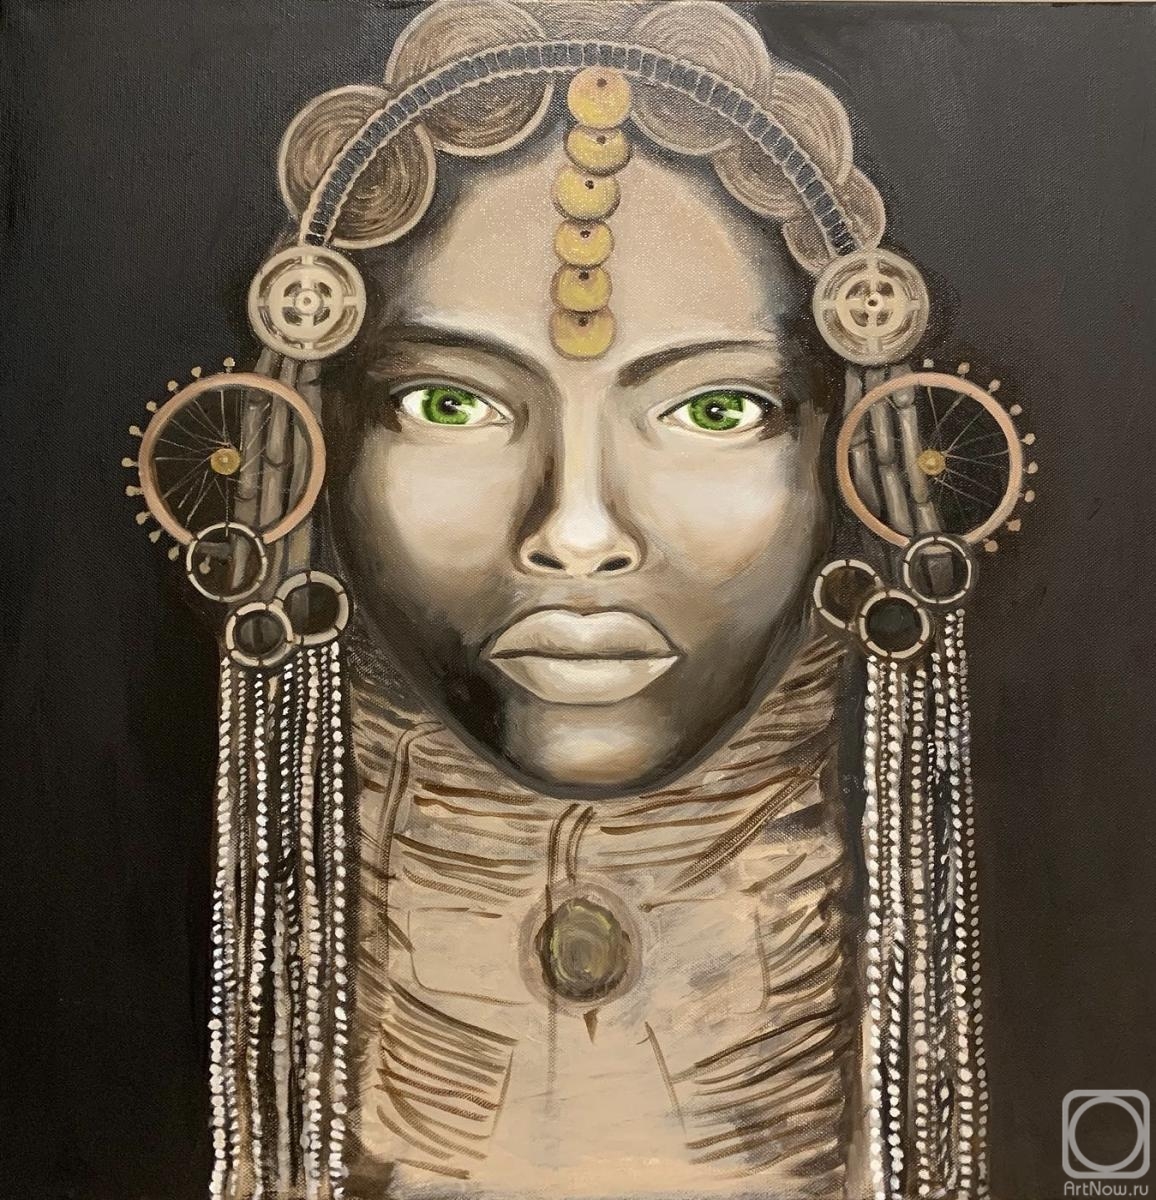 Dorovskih Elena. African woman